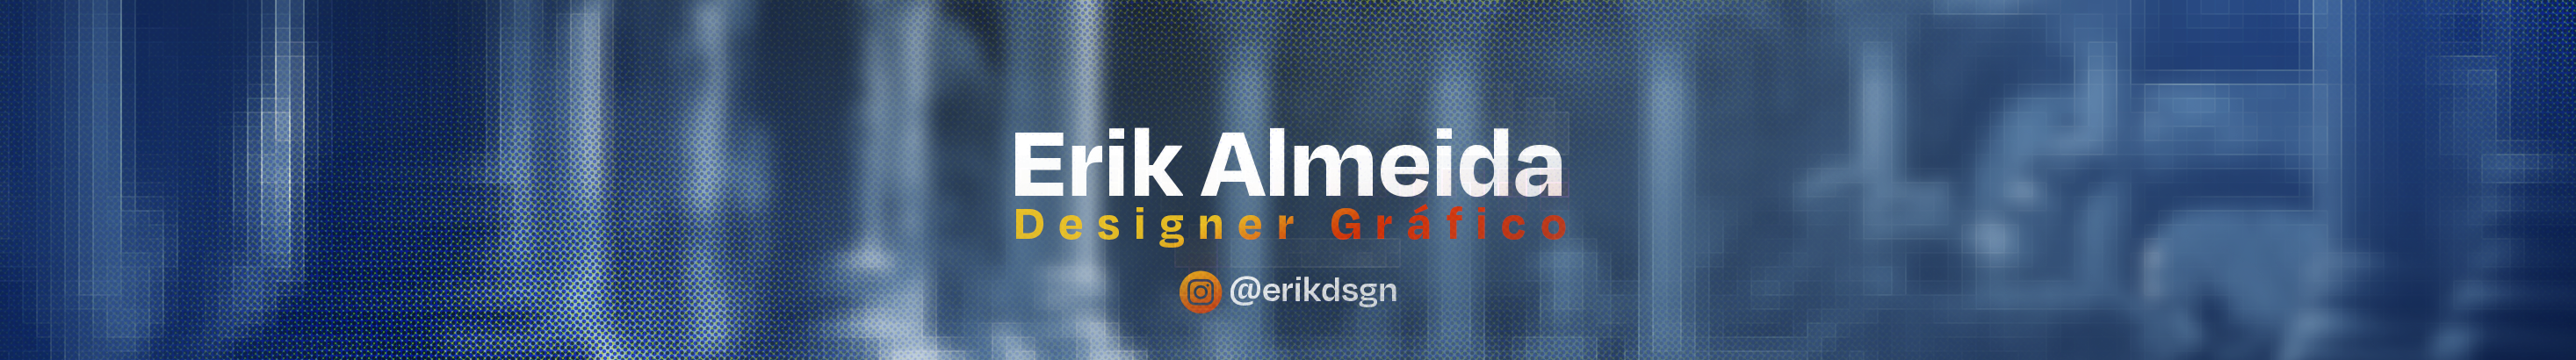 Erik Almeida's profile banner